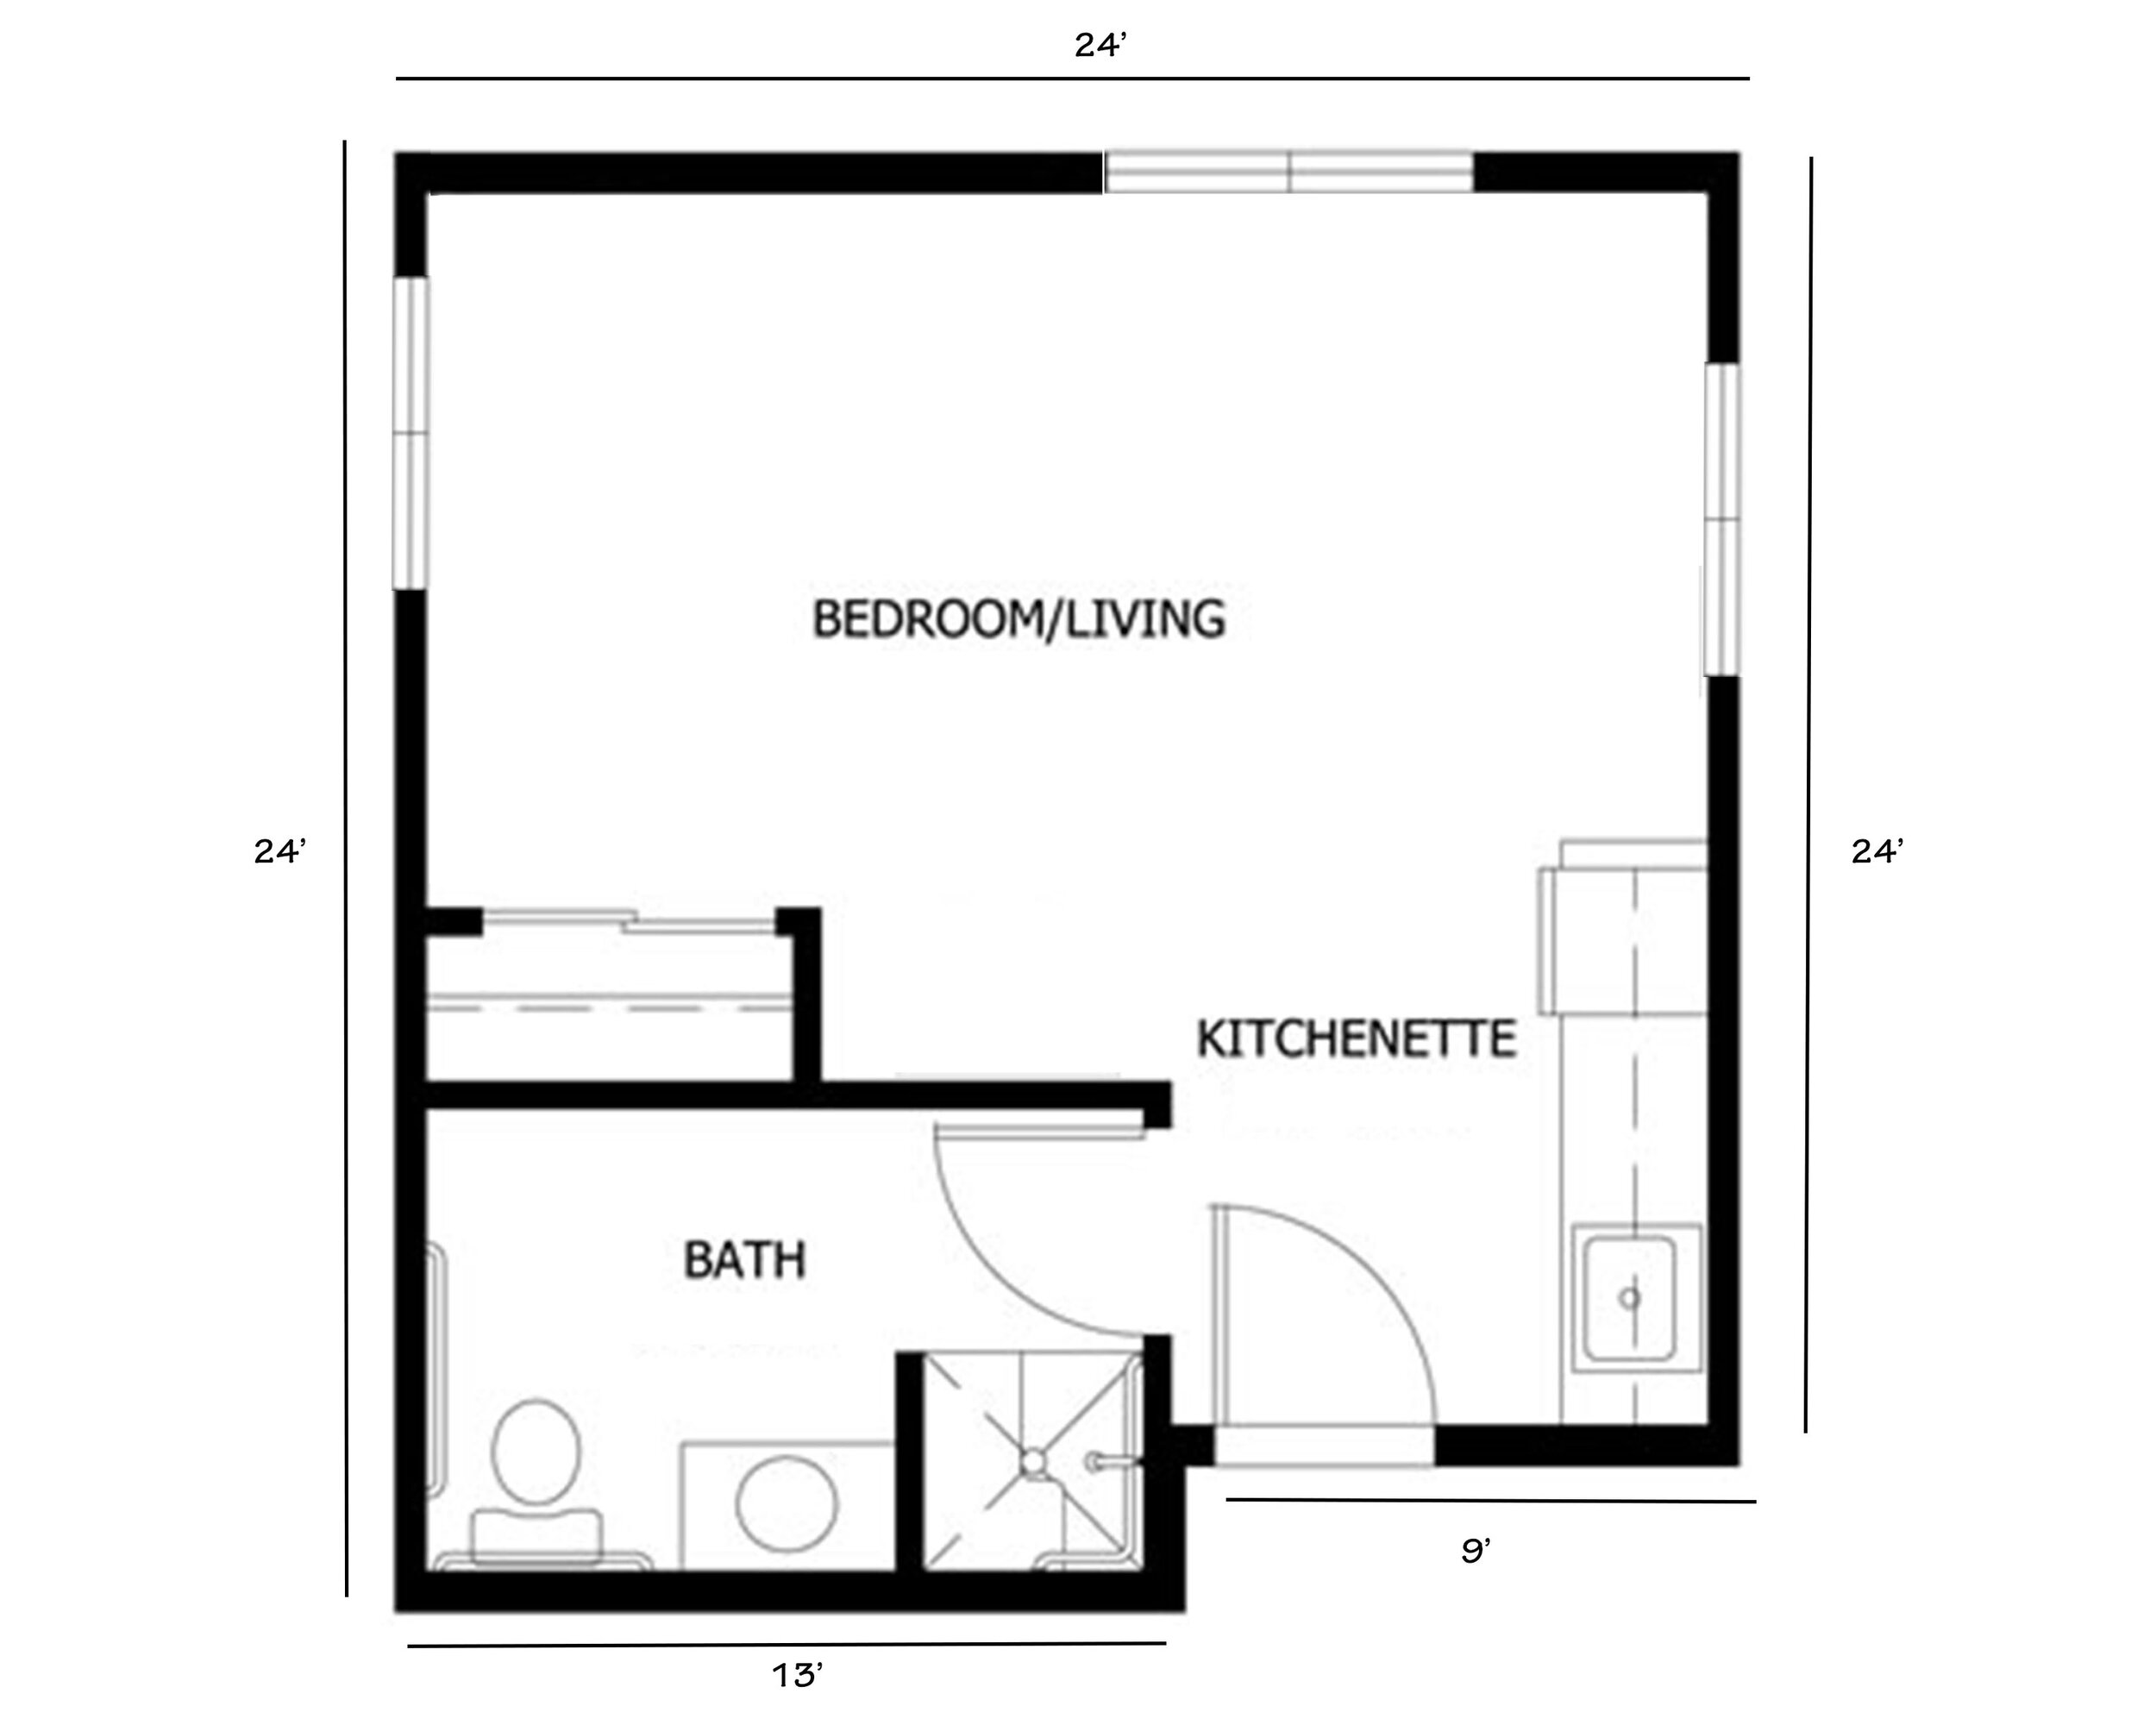 Studio Apartment Floor Plan - Client Copy.jpg